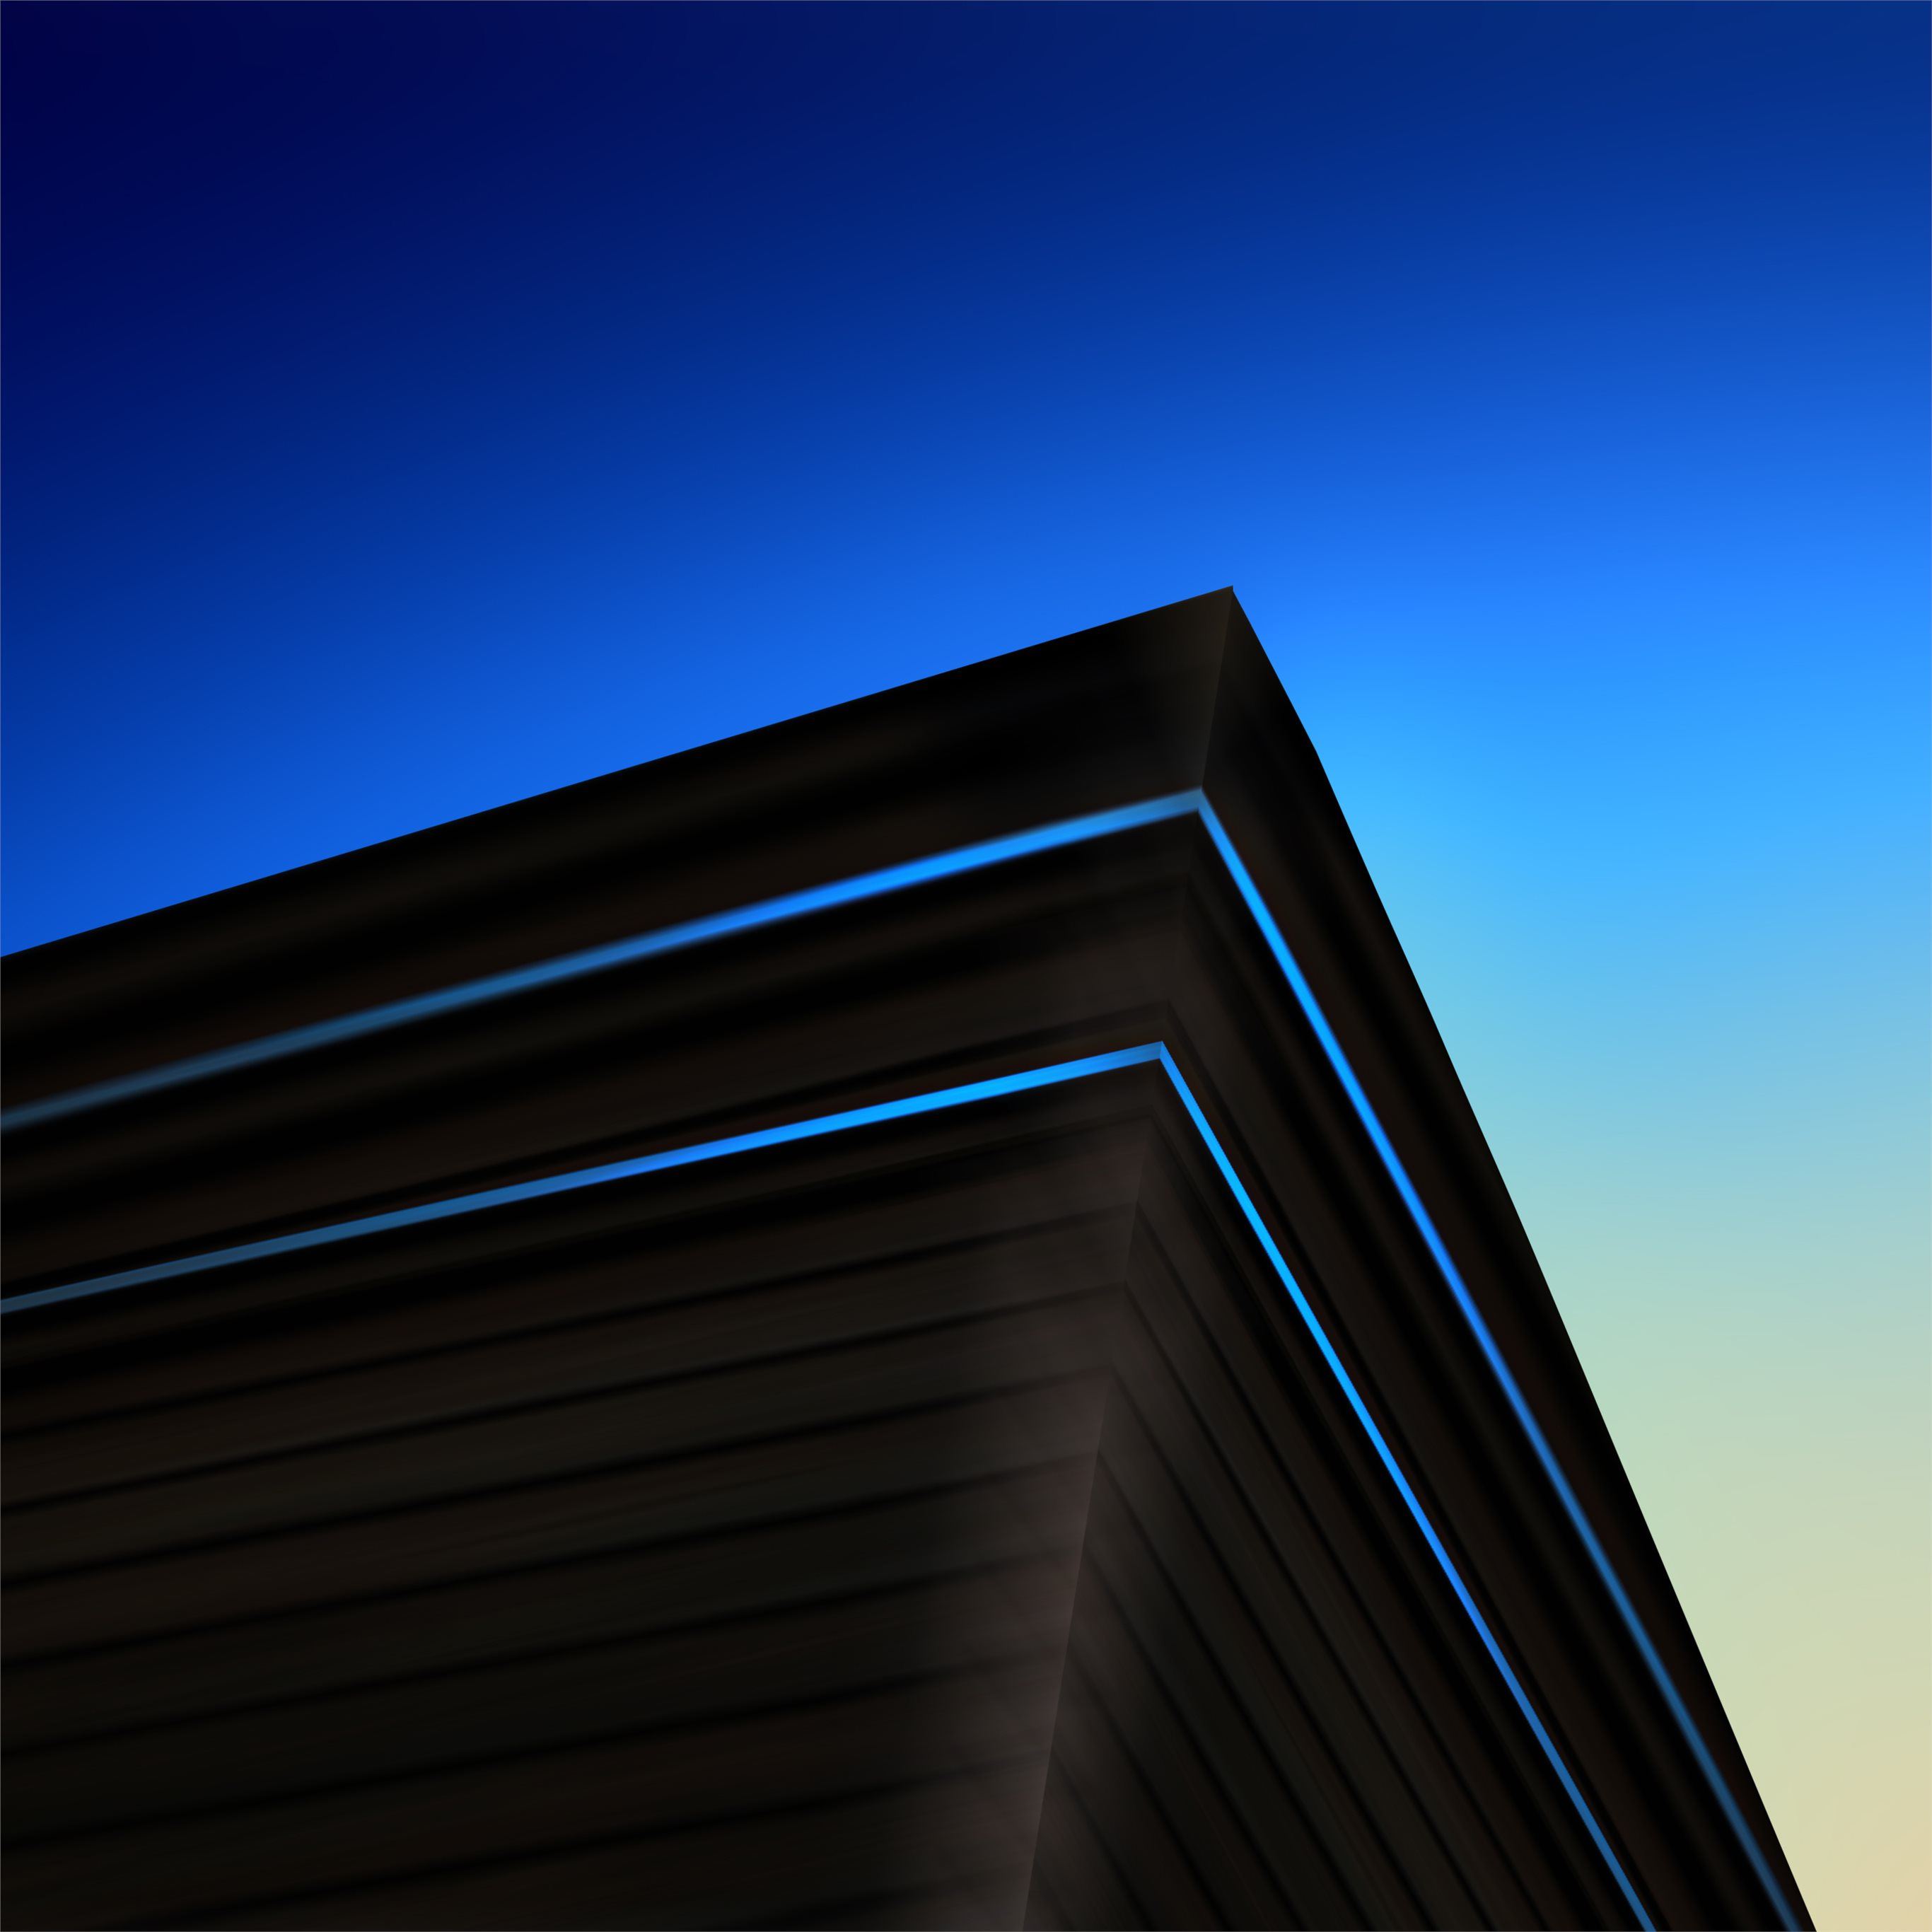 architecture minimalist 5k iPad Pro Wallpaper Free Download